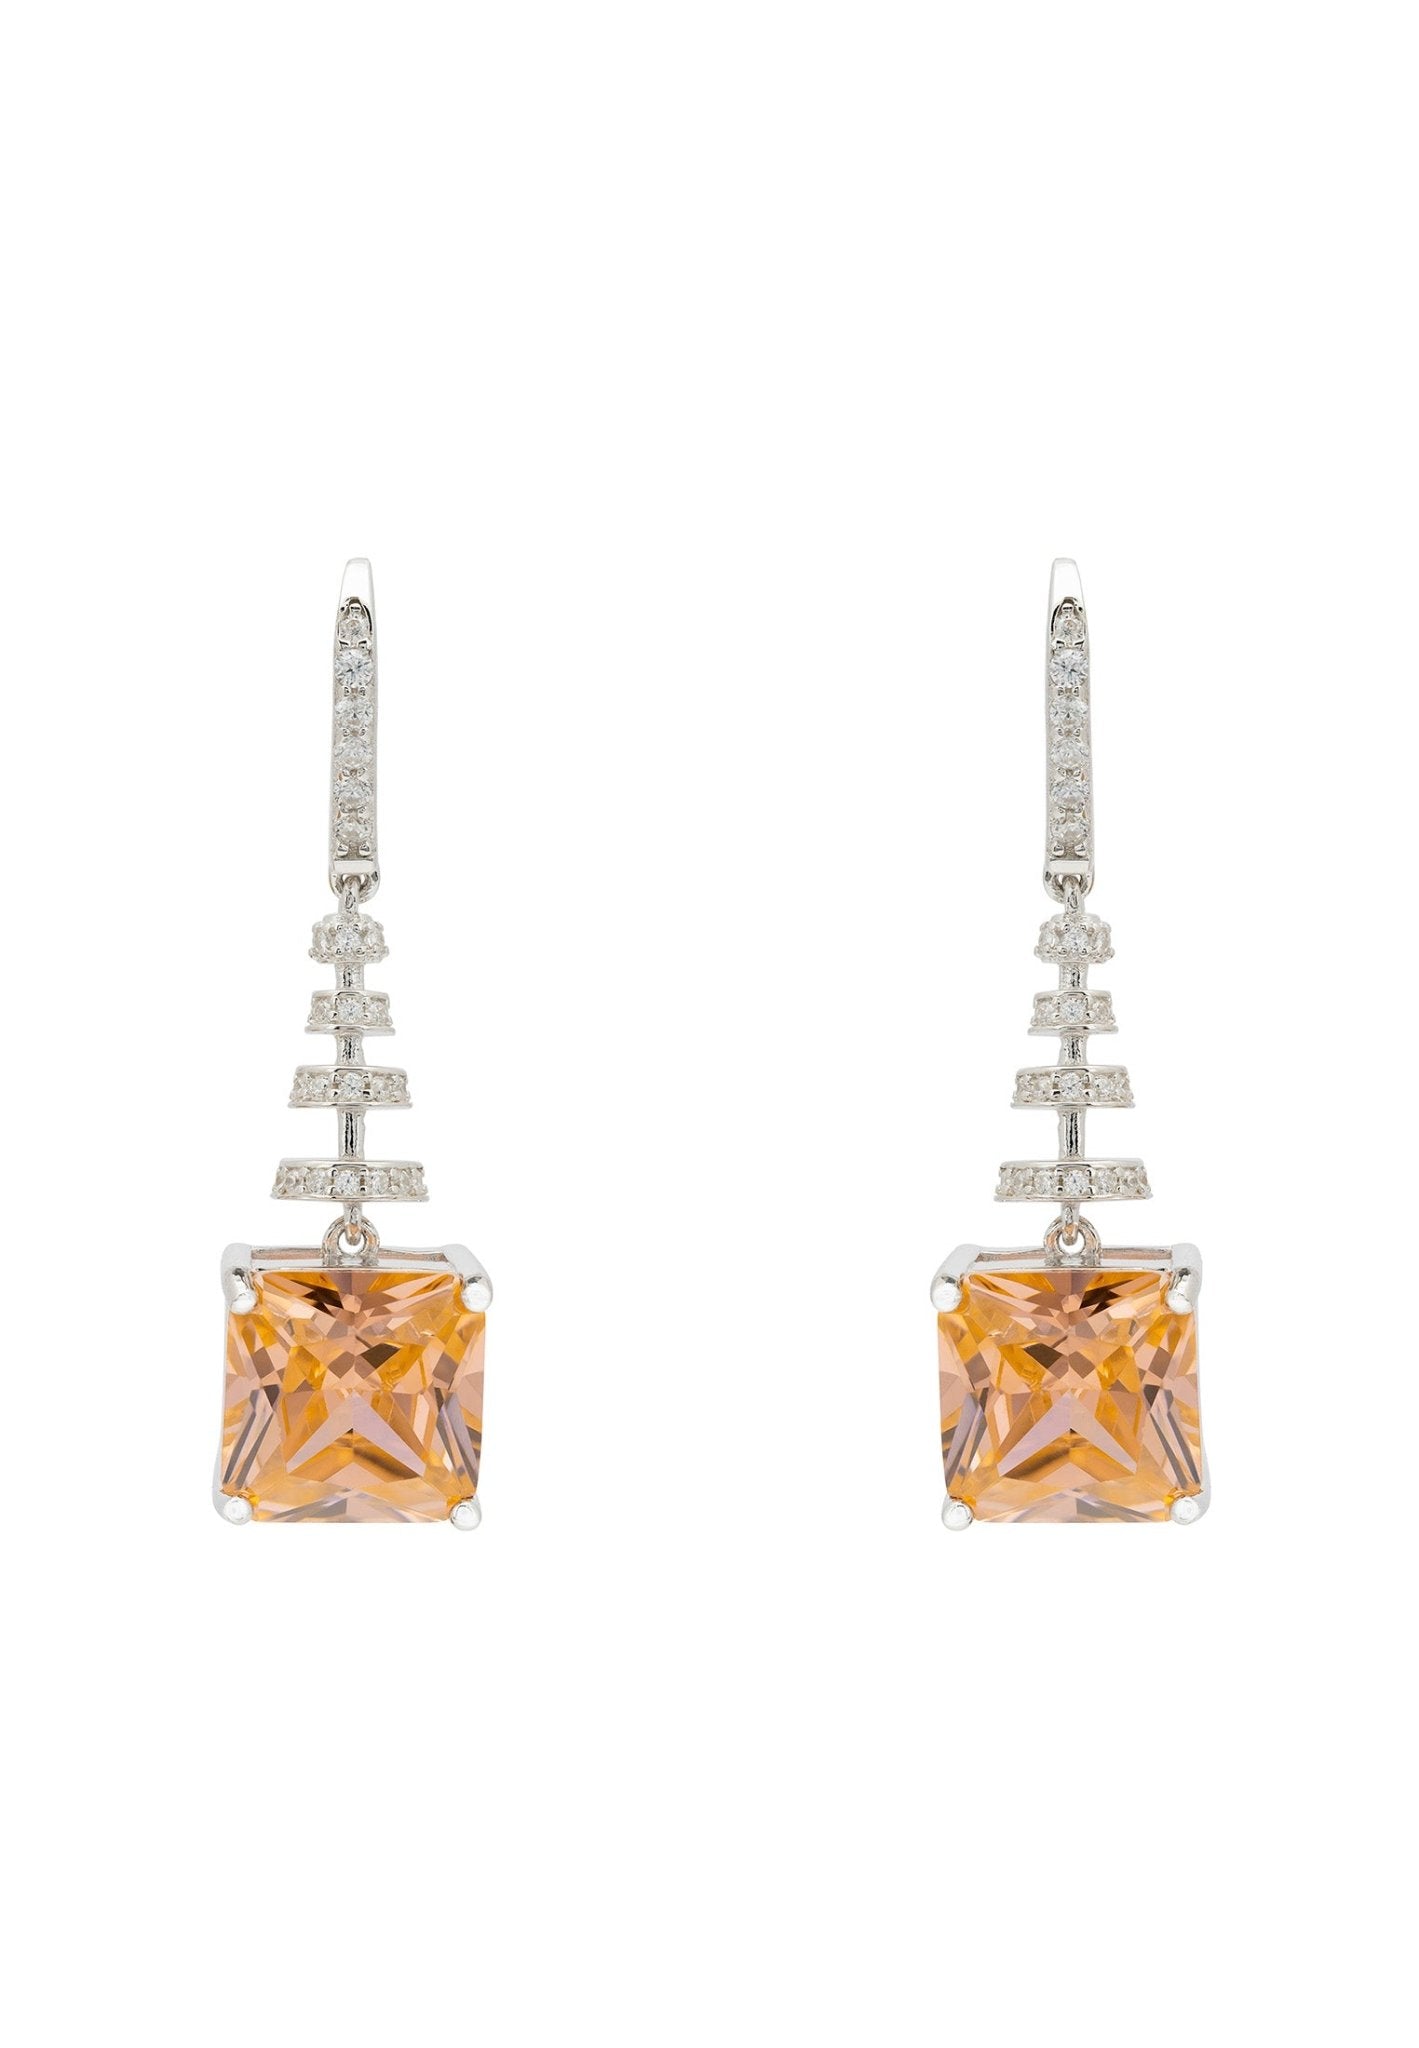 Spiral Square Crystal Drop Earrings Peach Silver - LATELITA Earrings